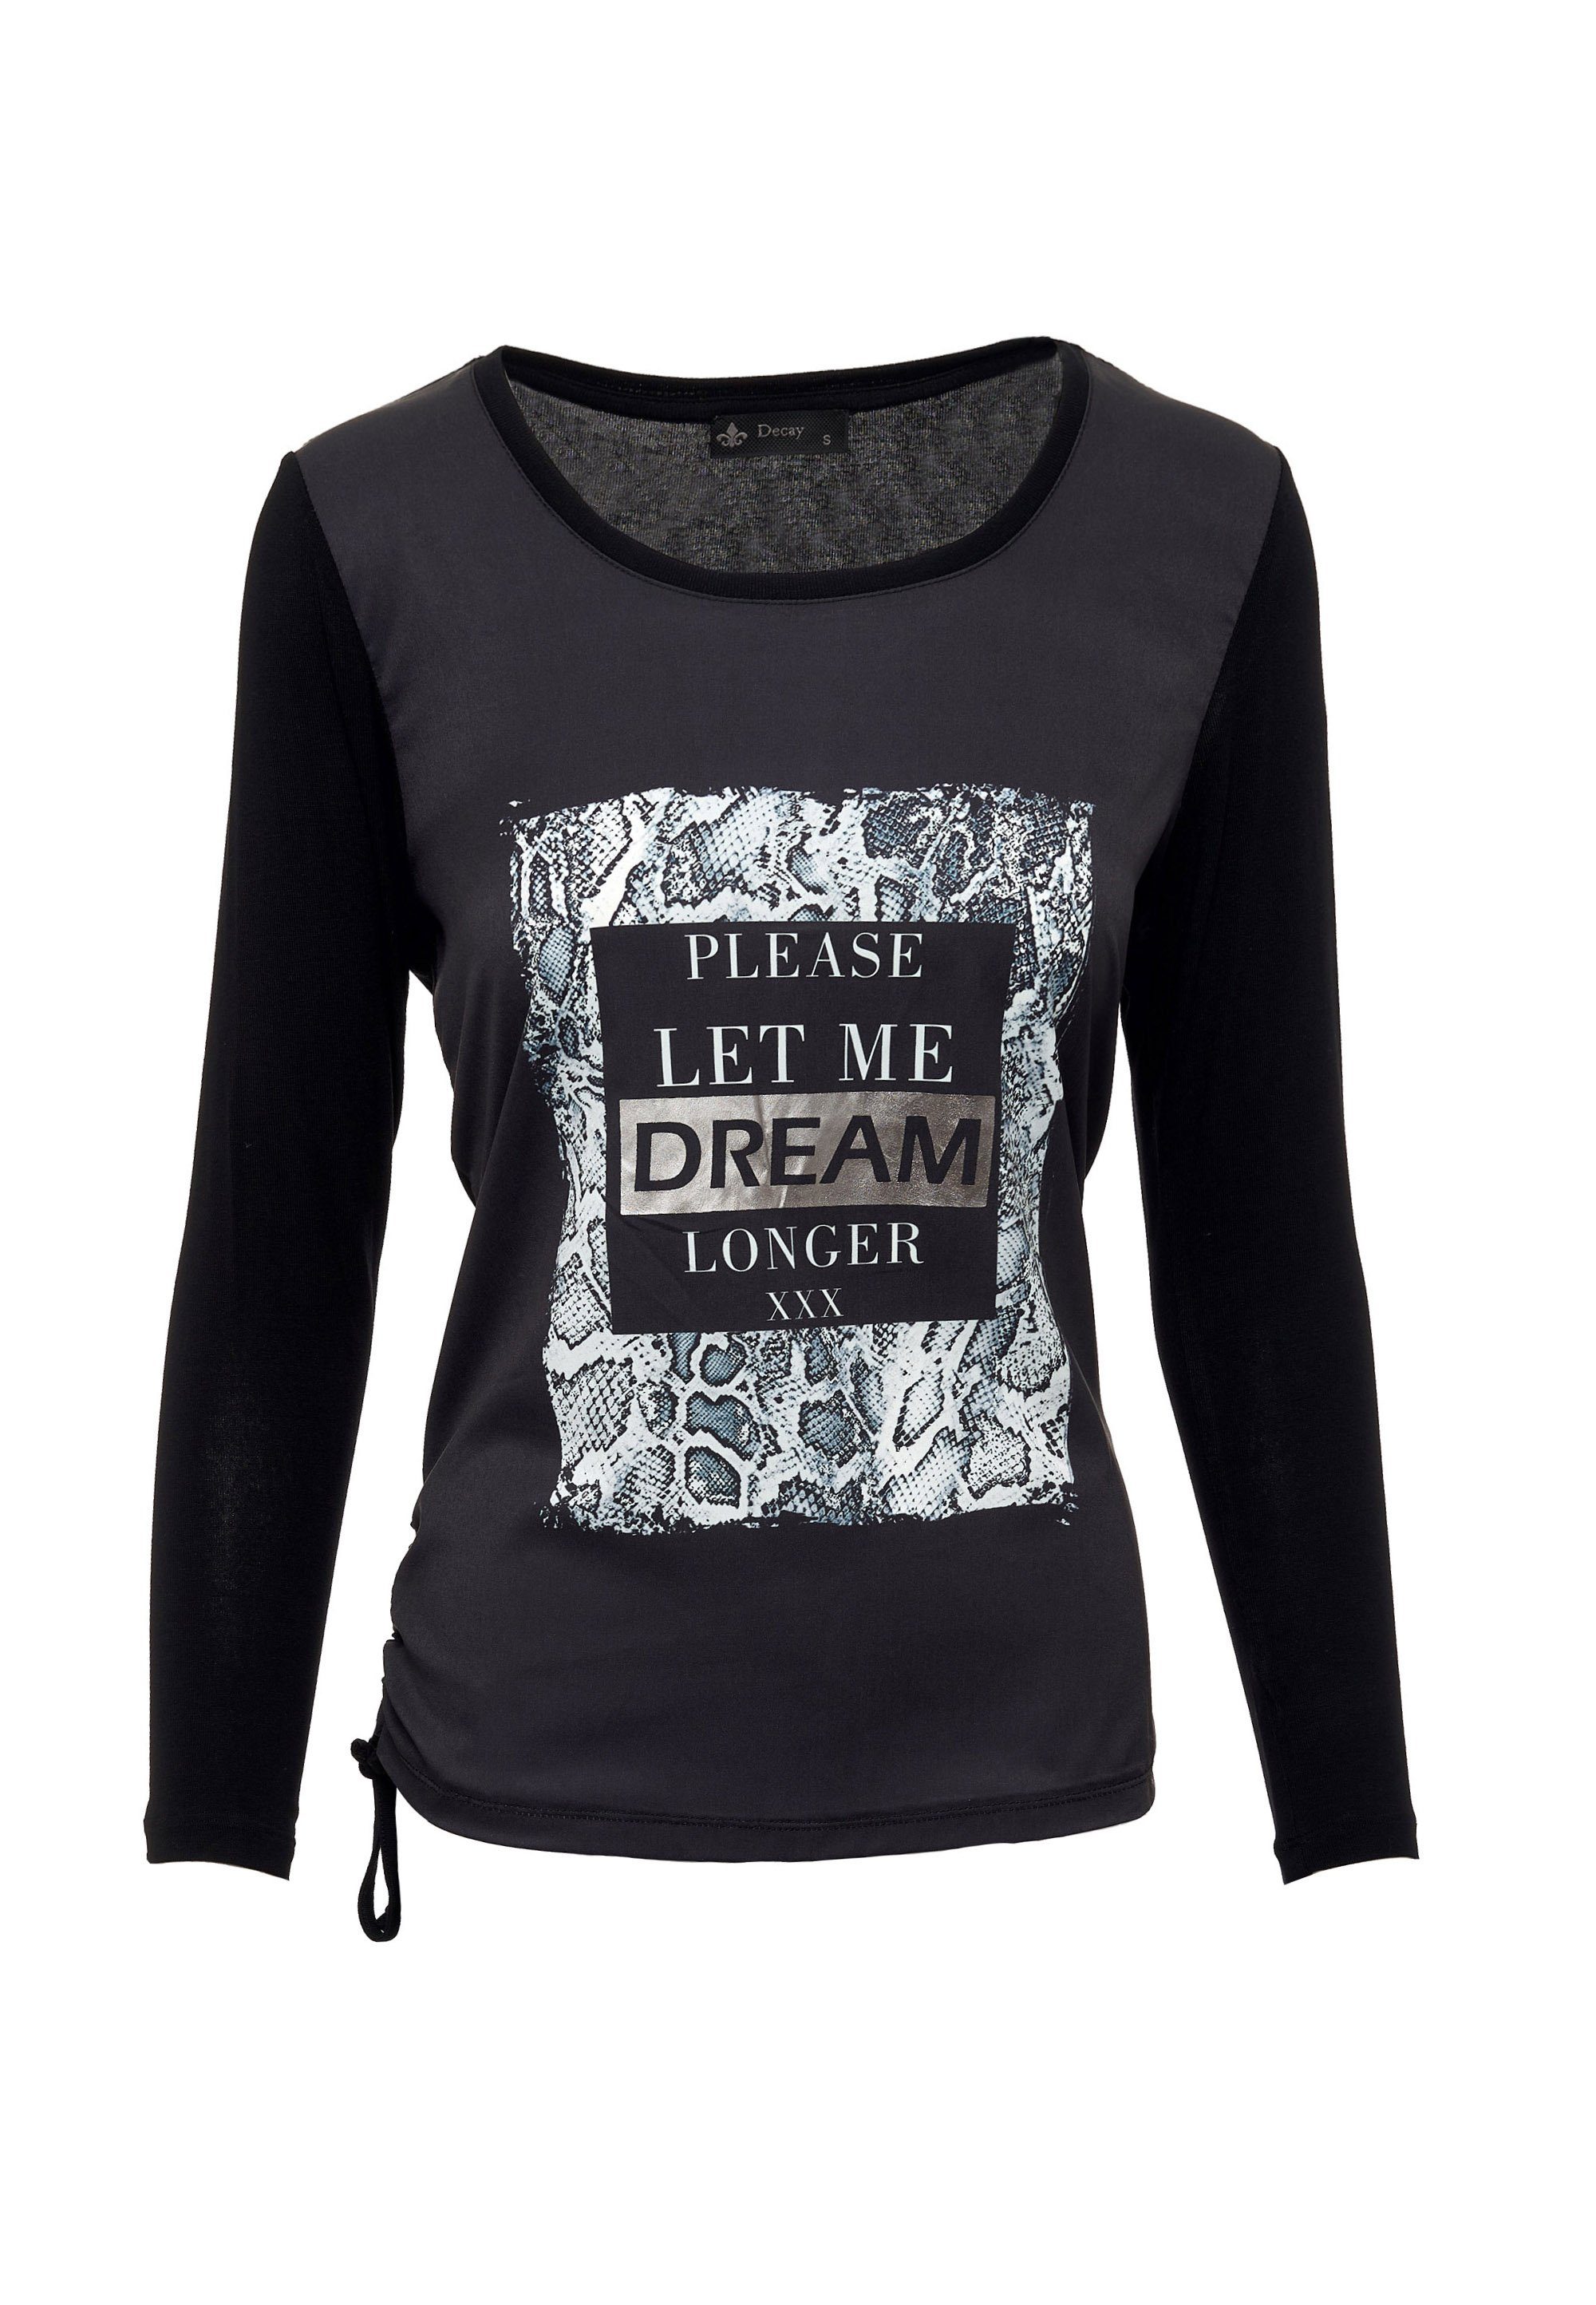 Decay Langarmshirt mit schwarz Metallic-Effekt trendigem